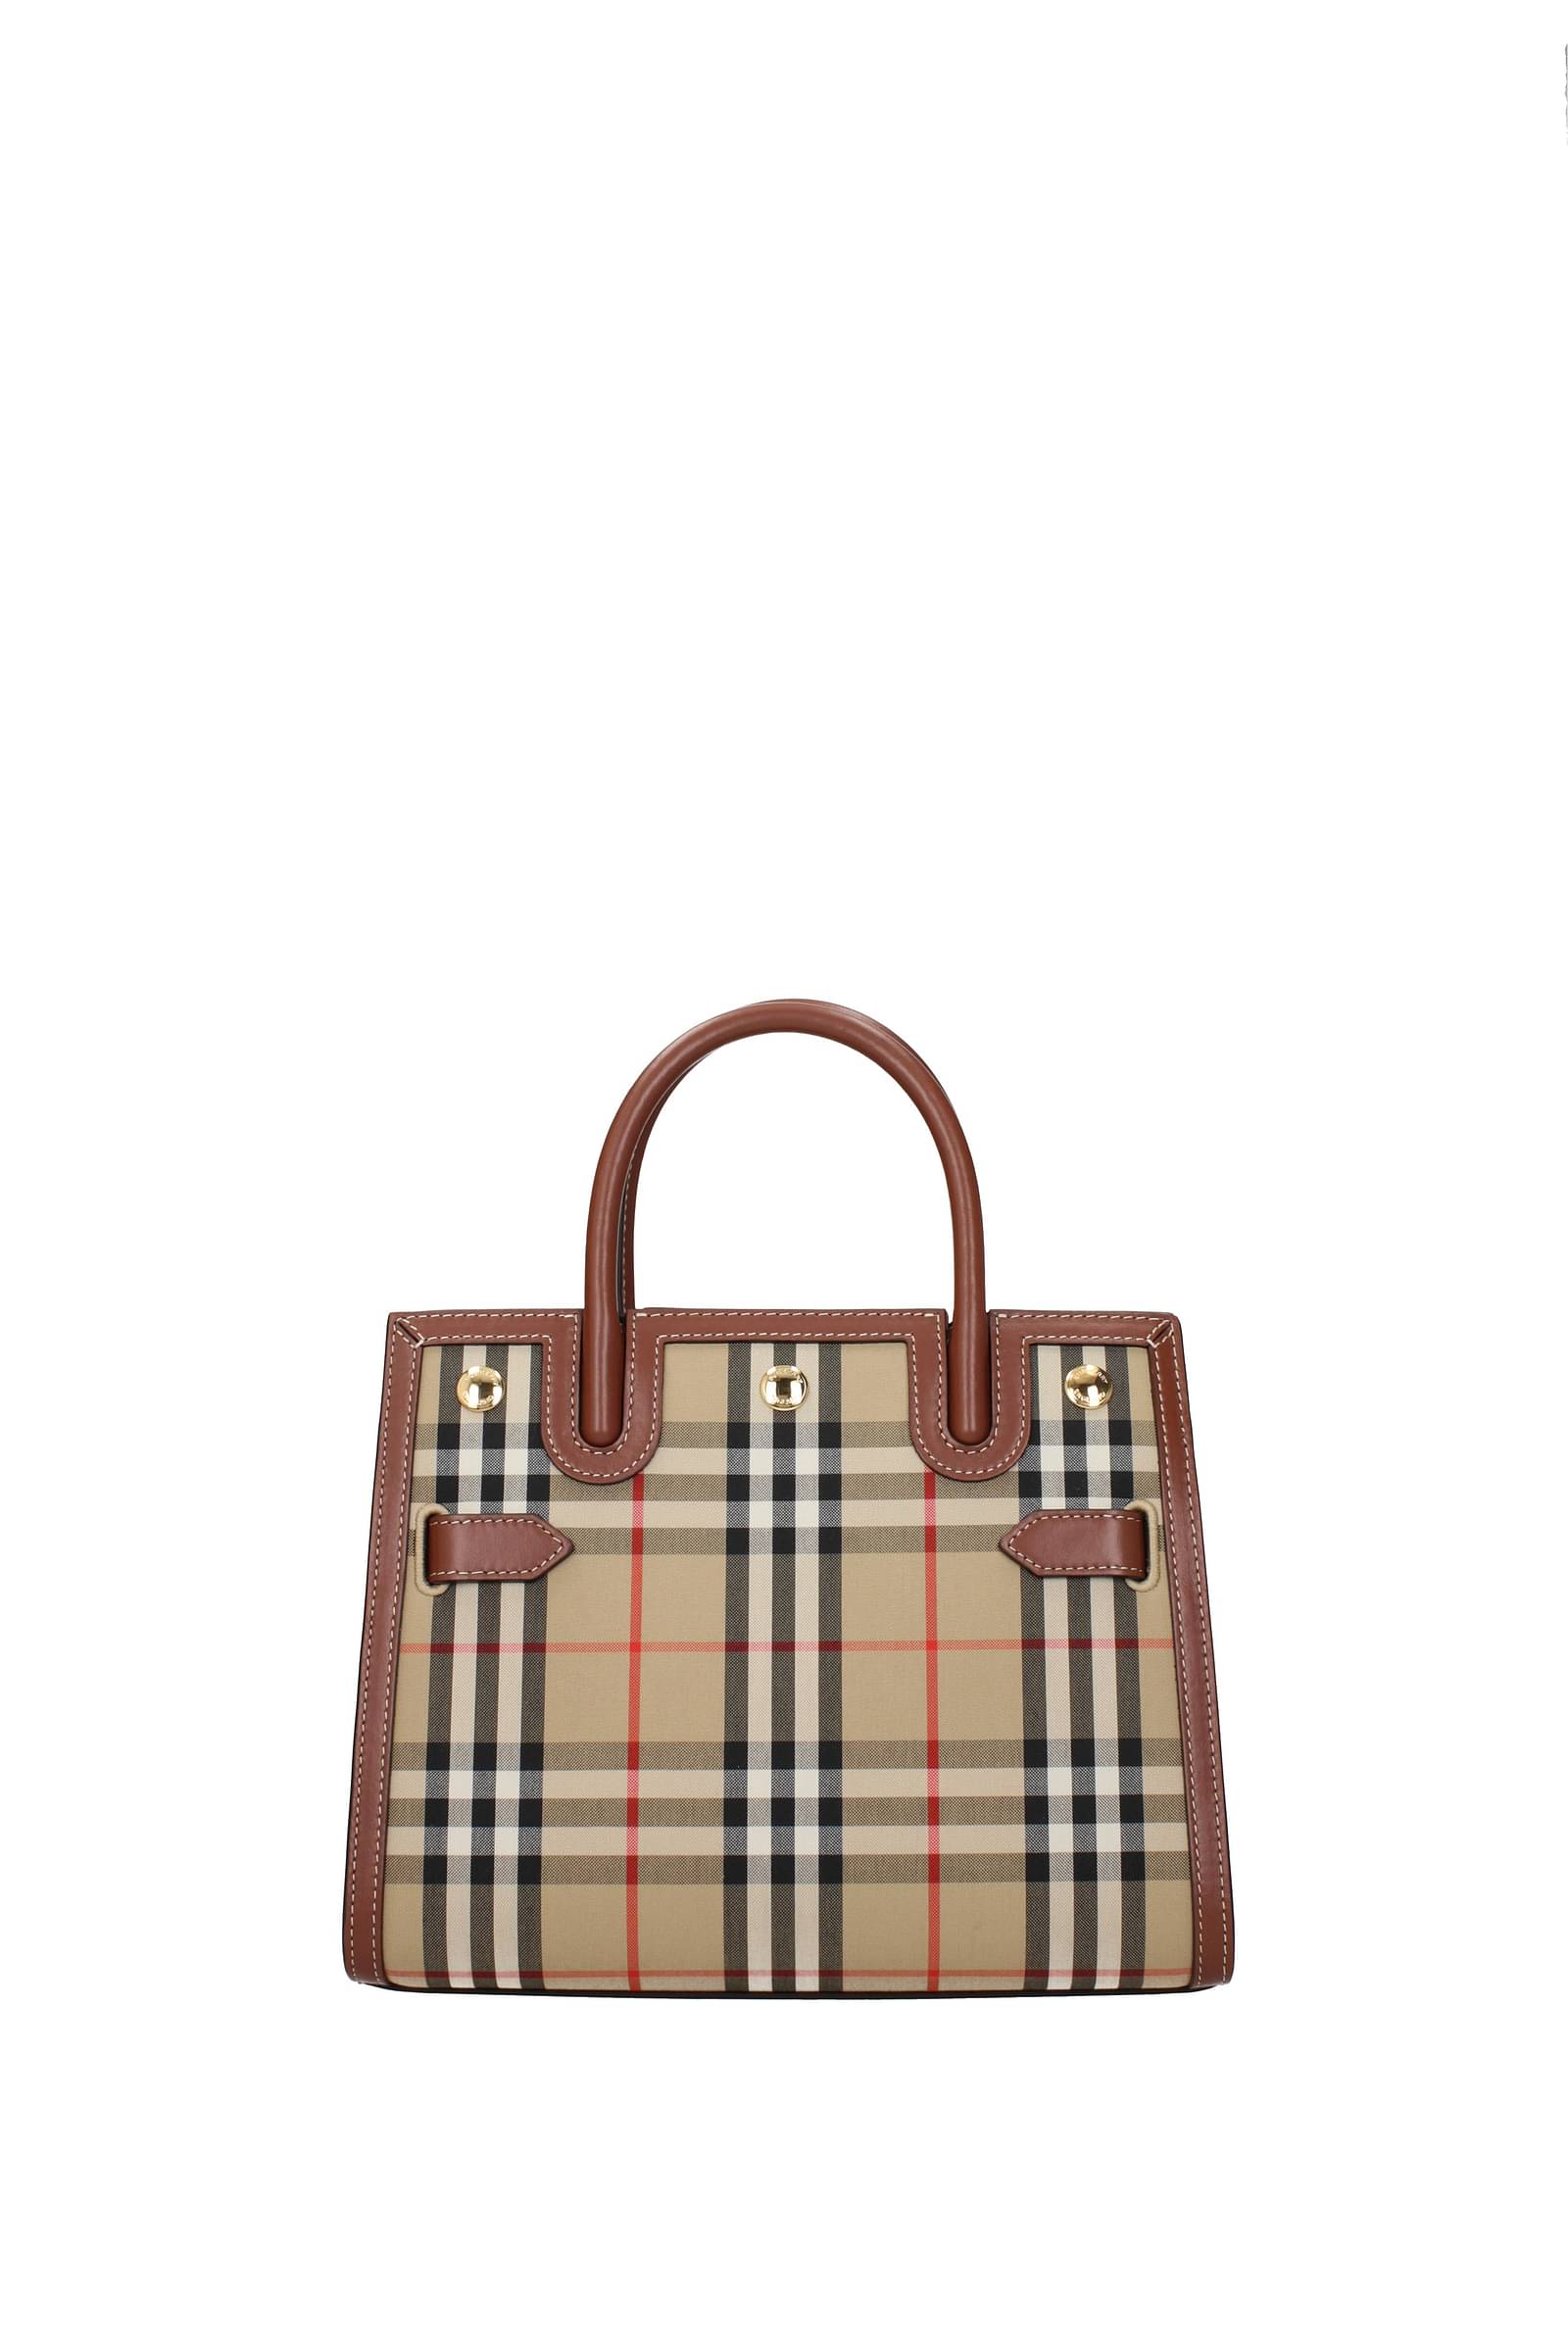 Burberry - The Orchard | Burberry handbags, Burberry bag, Bags